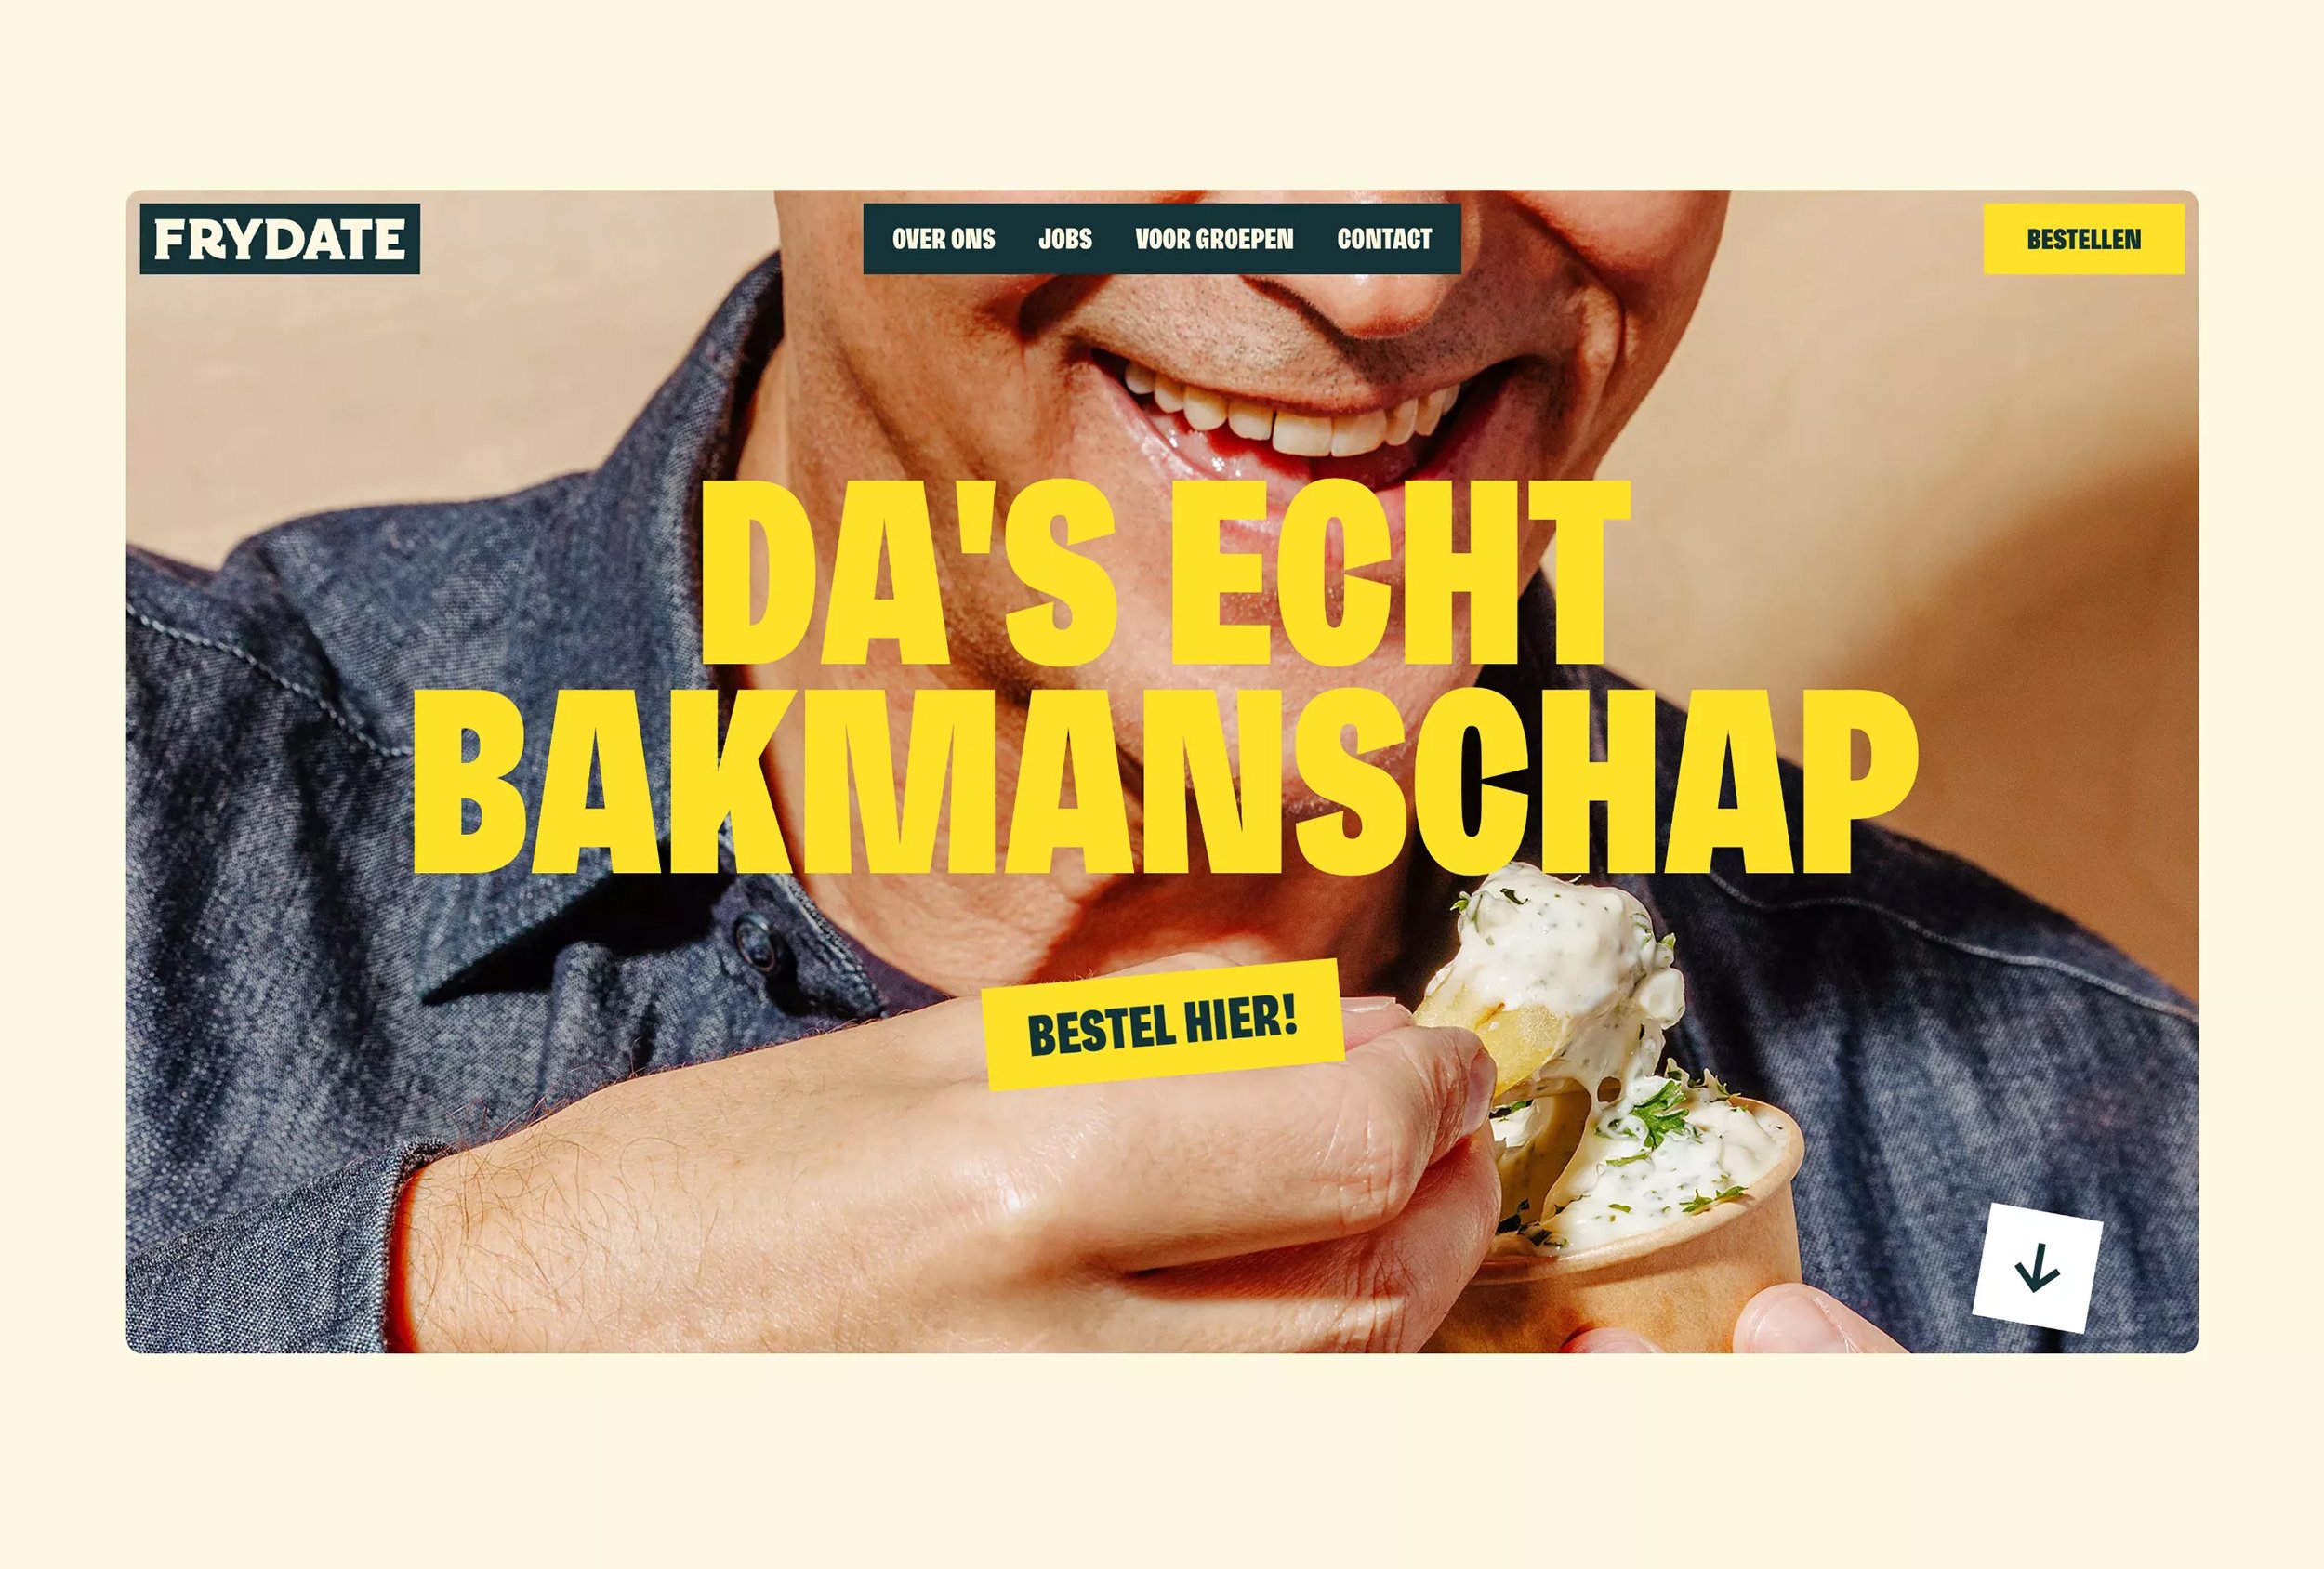 Logo, art direction, website and motion graphics for Belgian fast food brand Frydate, designed by Skinn.